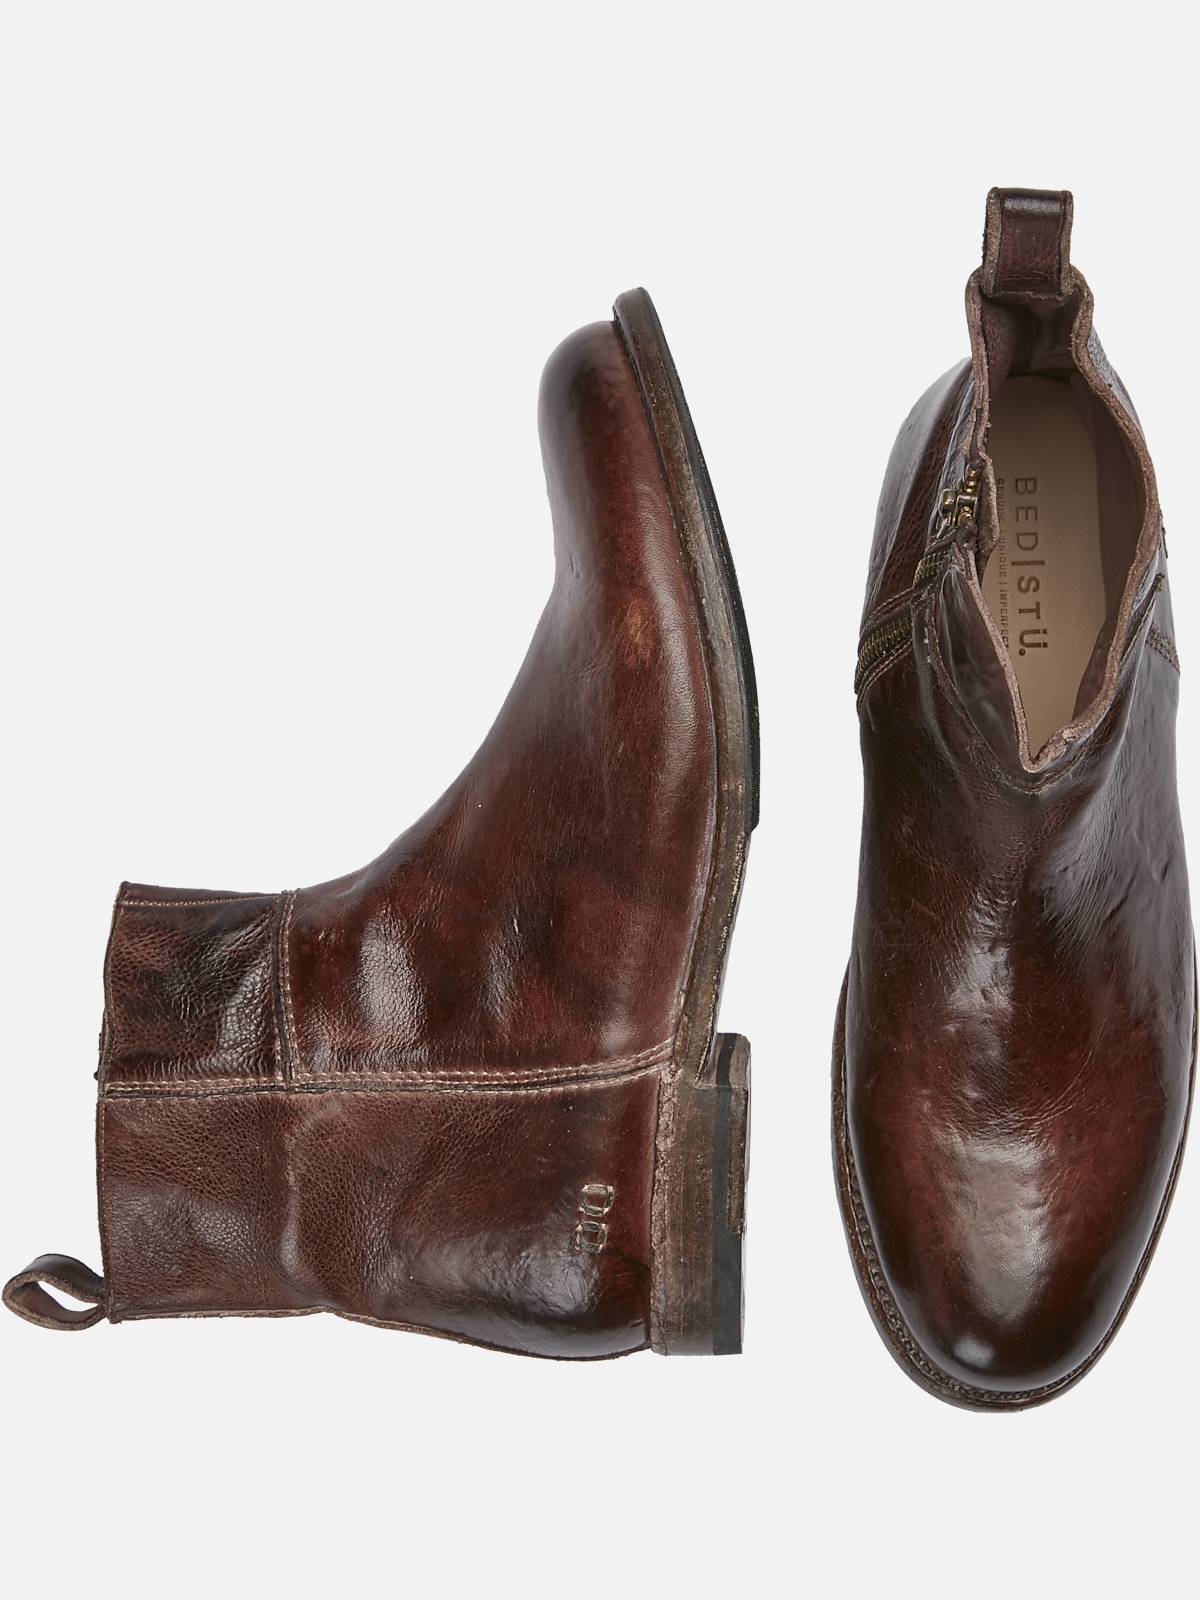 Bedstu Kaldi Plain Toe Boots | All Clearance $39.99| Men's Wearhouse